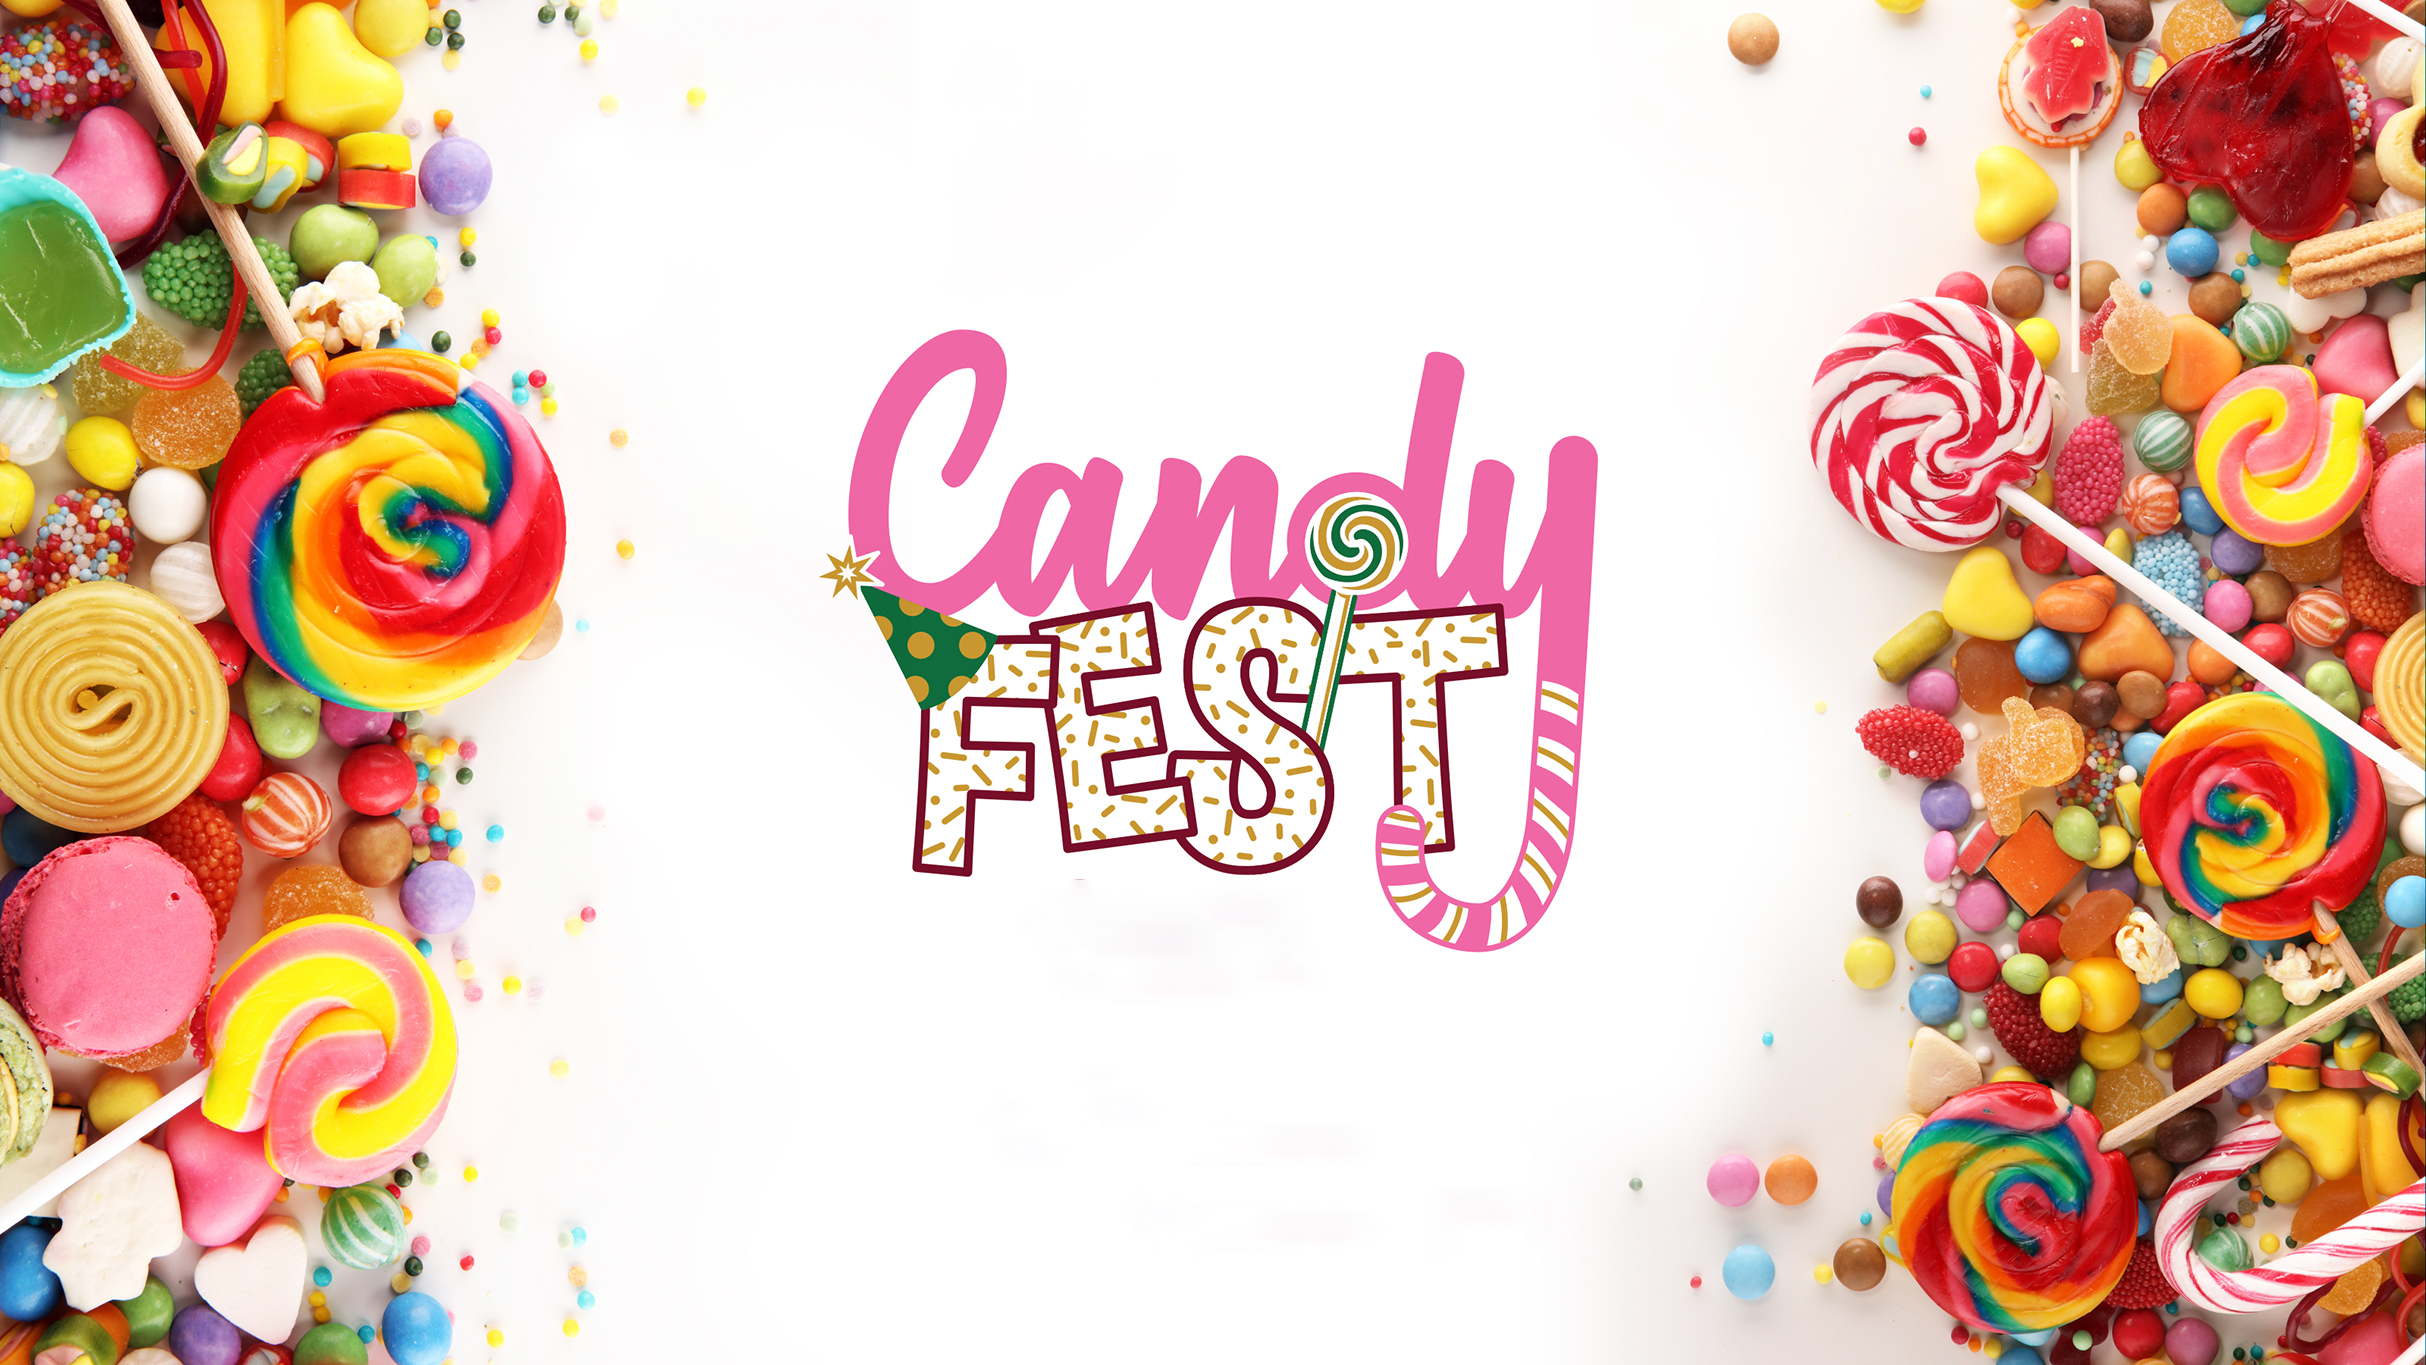 CandyFest